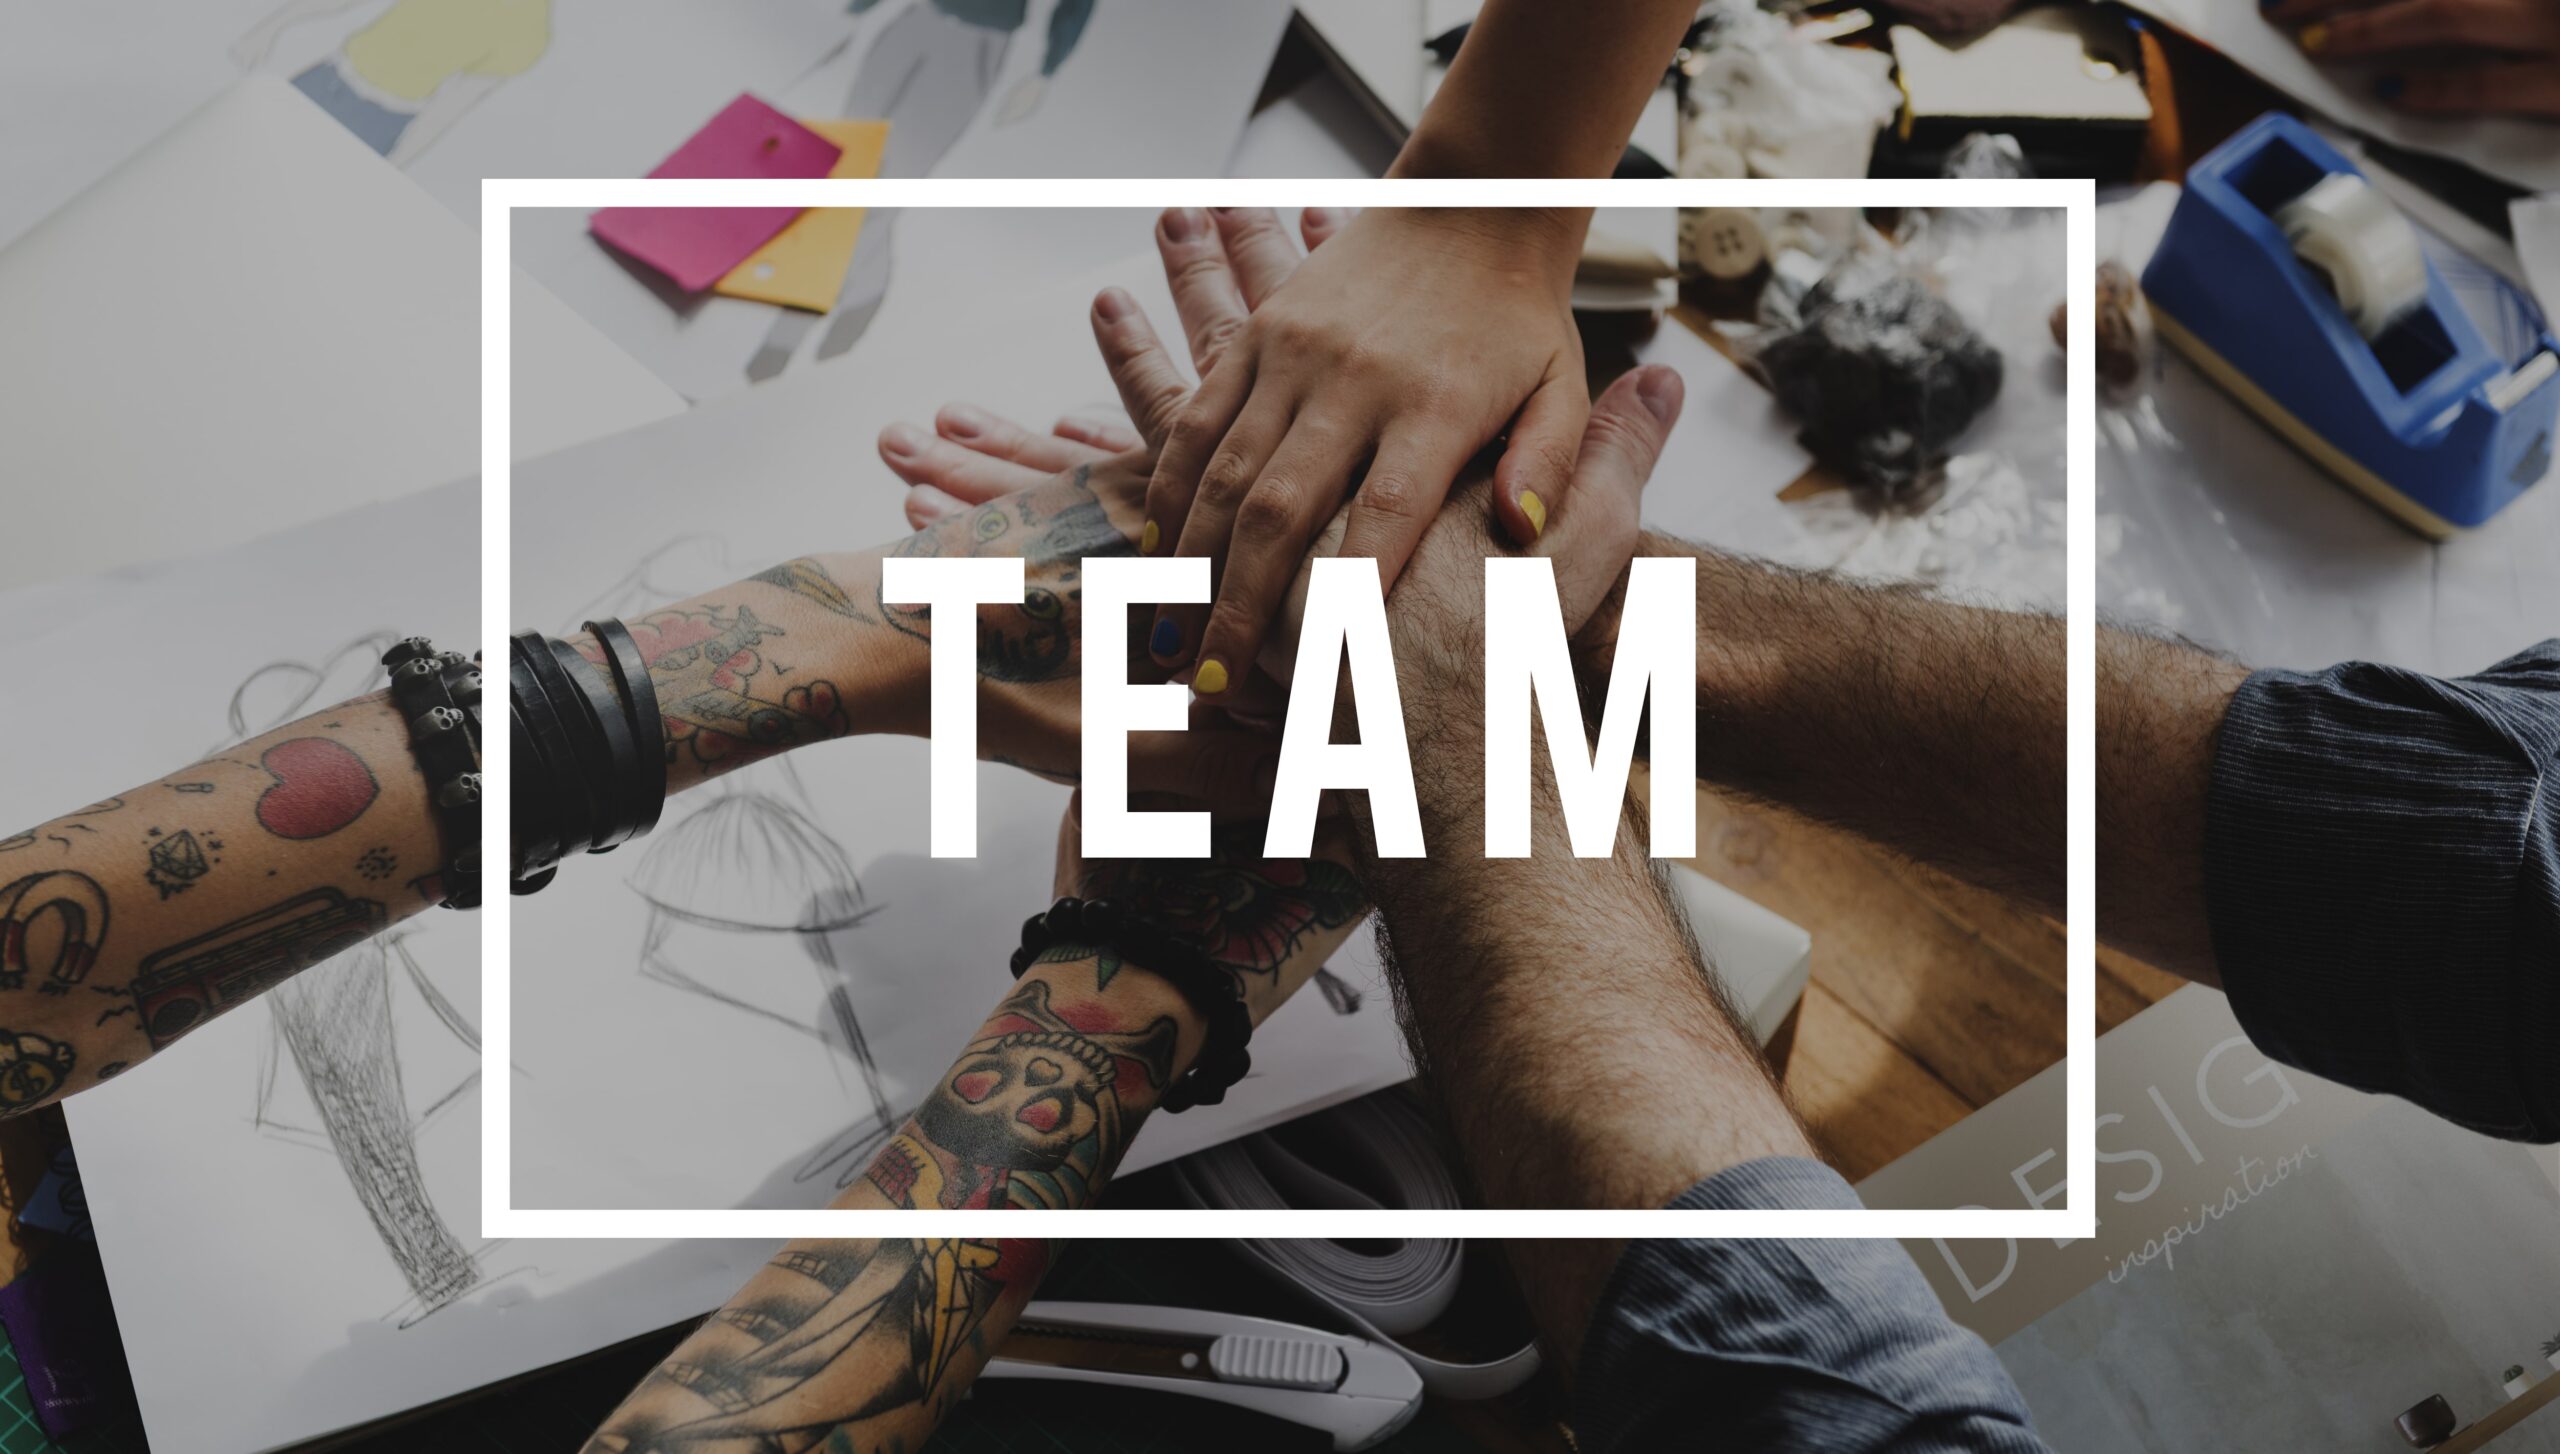 collaboration-team-together-we-can-brainstorm-min